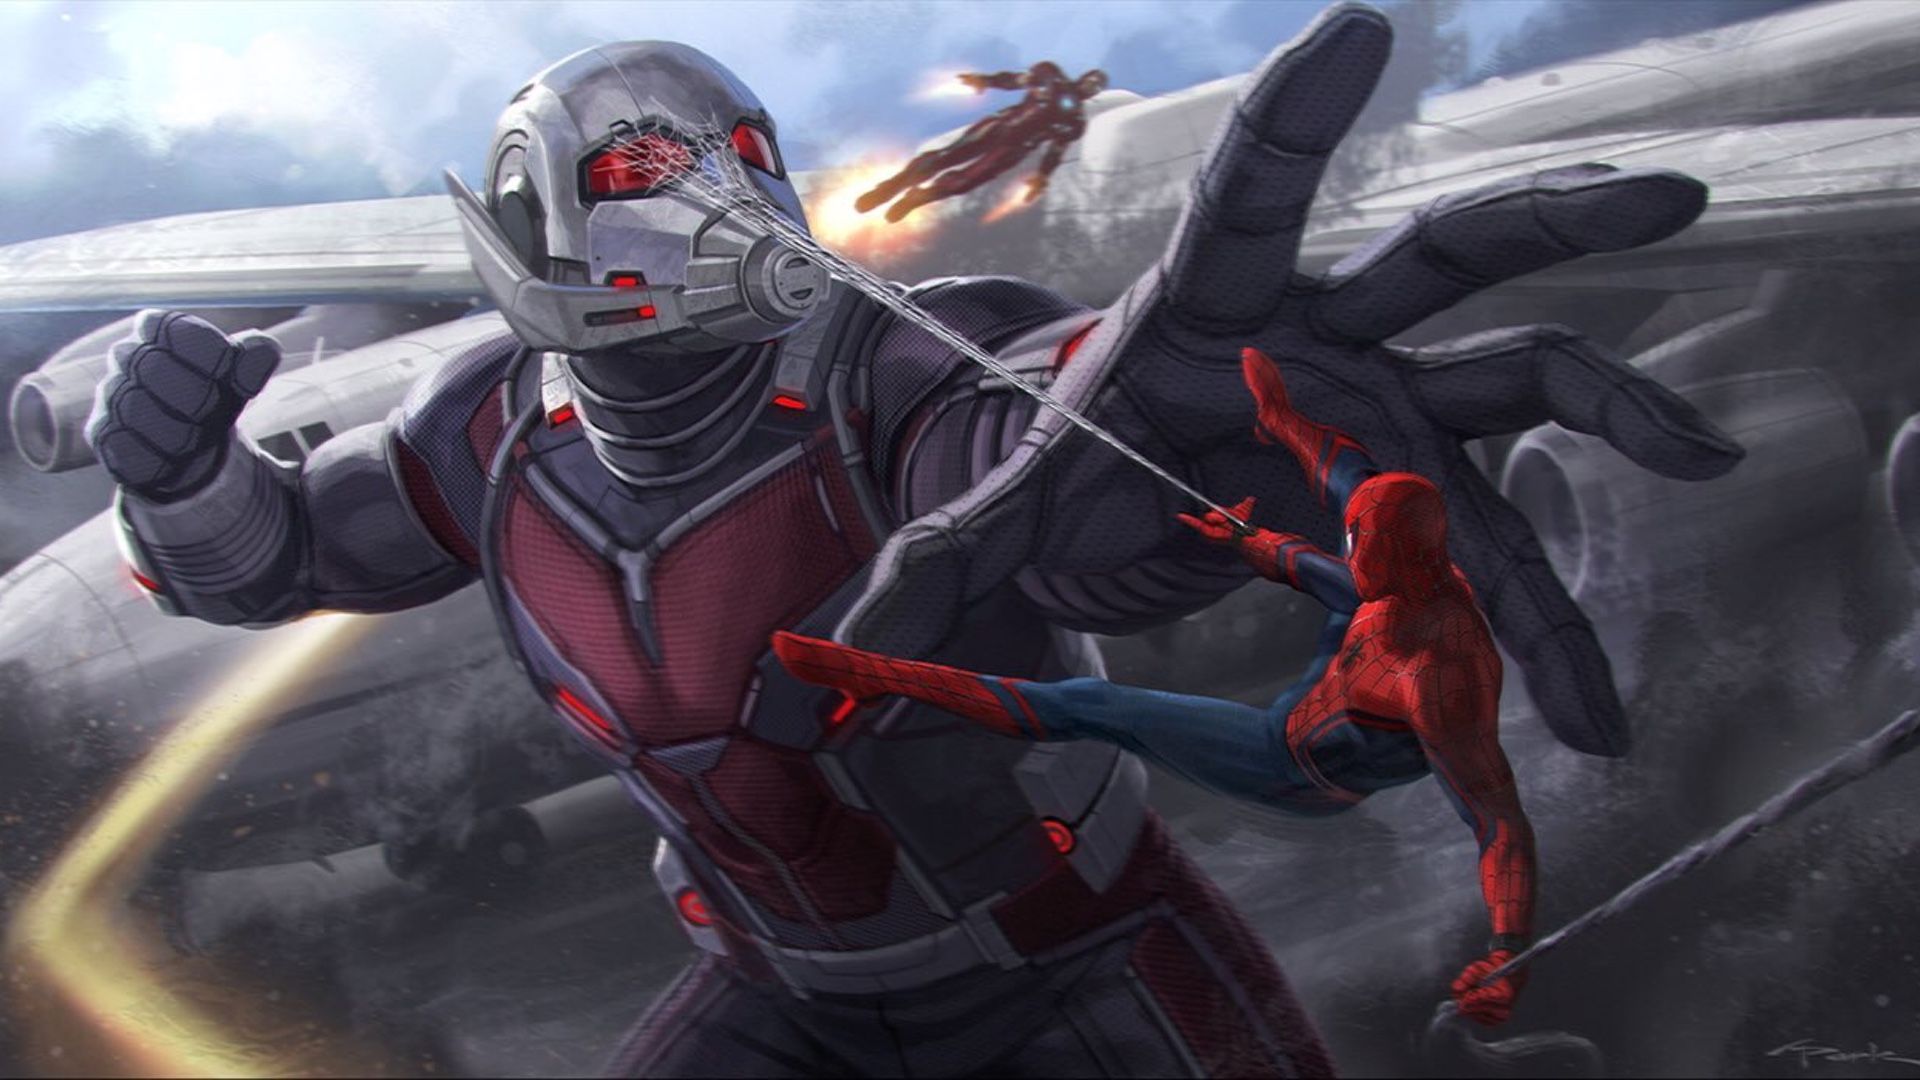 Spider-Man vs Ant-Man